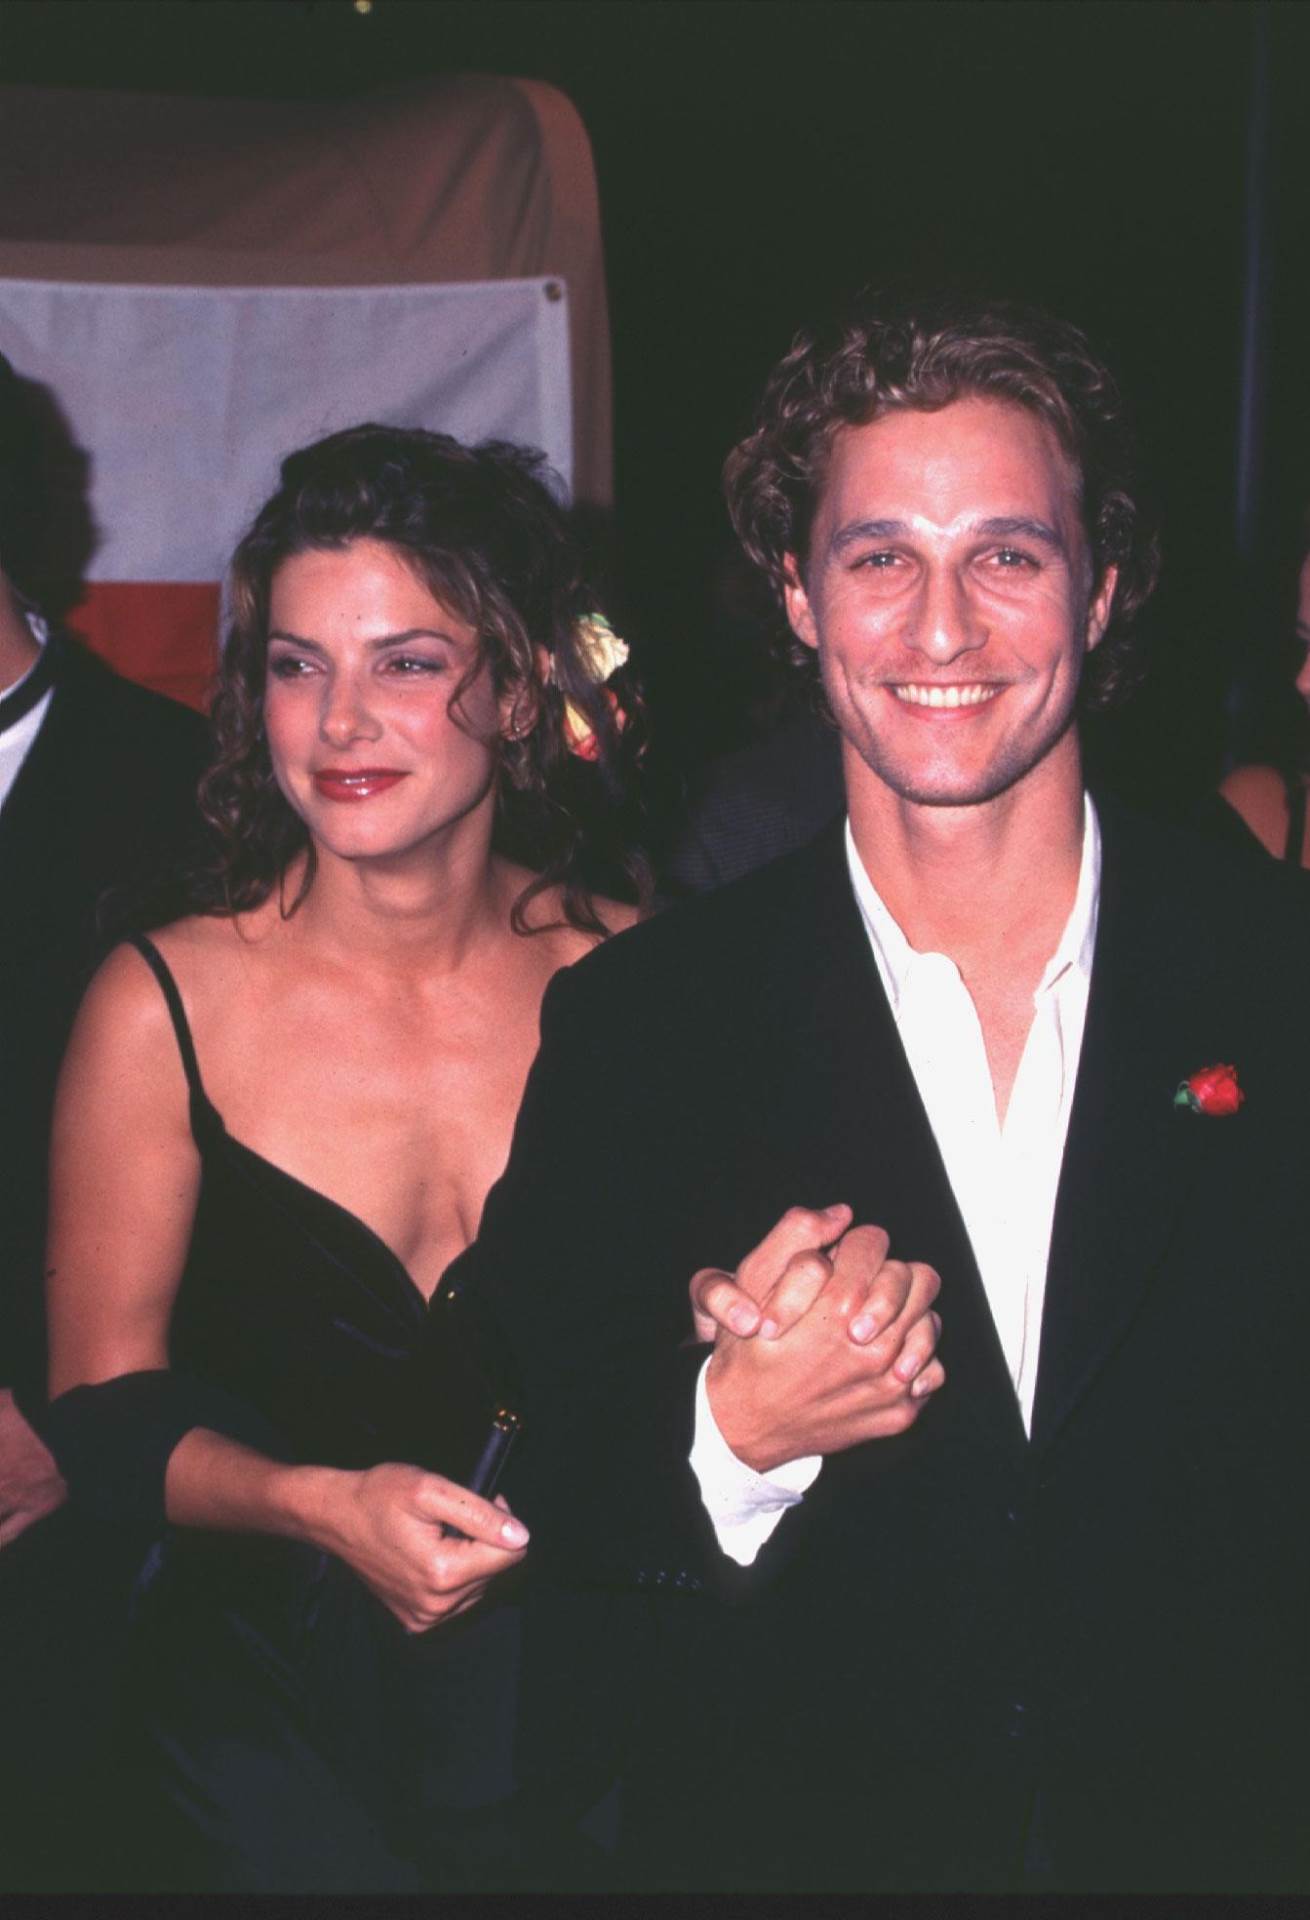 Sandra Bullock i Matthew McConaughey